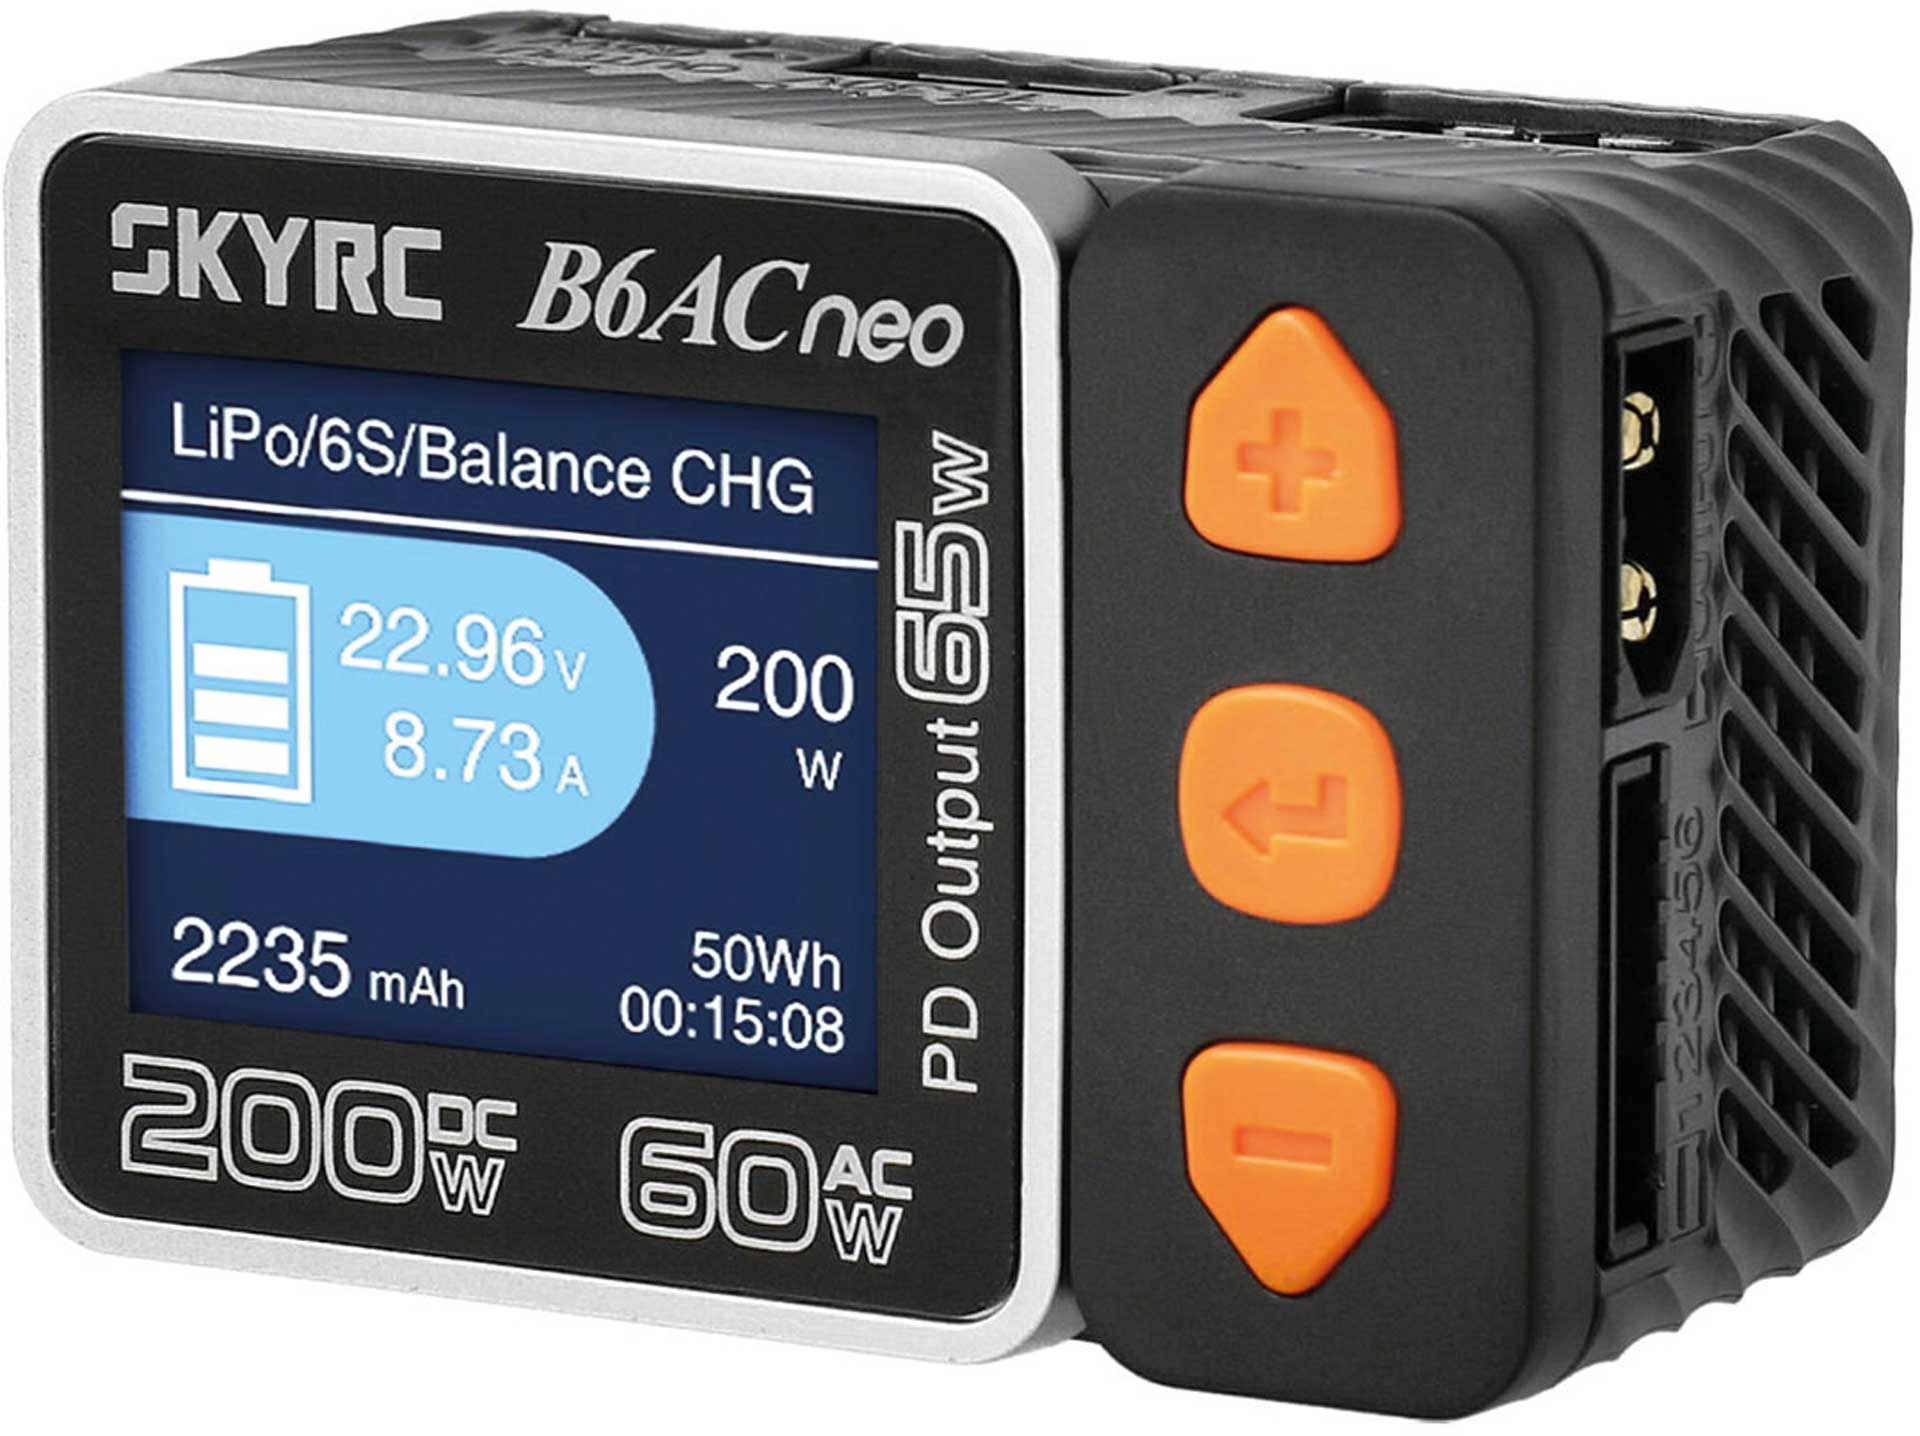 SKYRC B6AC Neo LiPo 1-6s charger